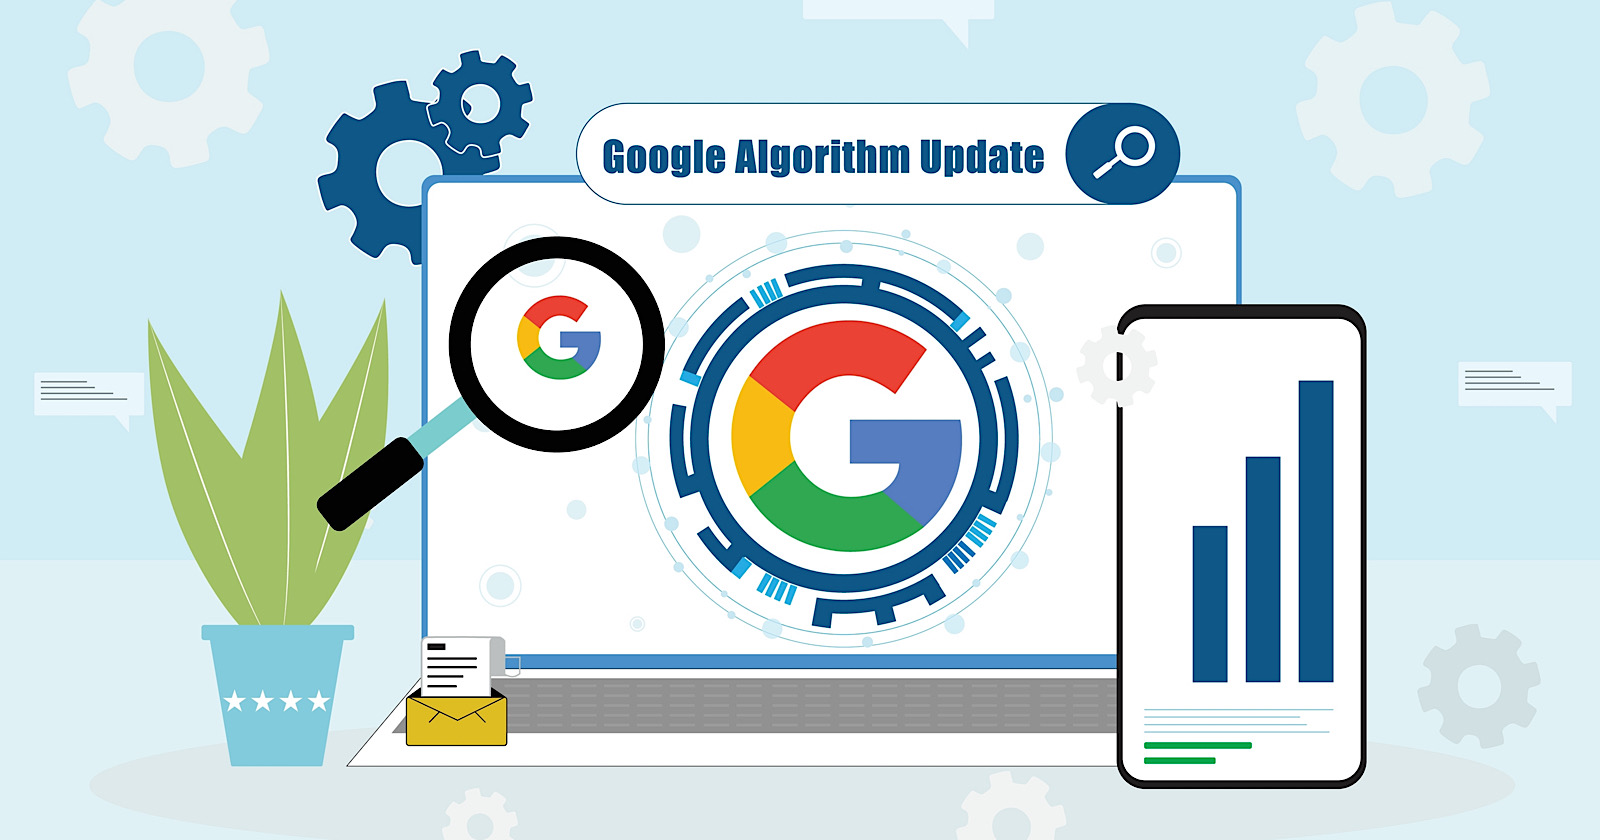 Google’s Algorithm Updates